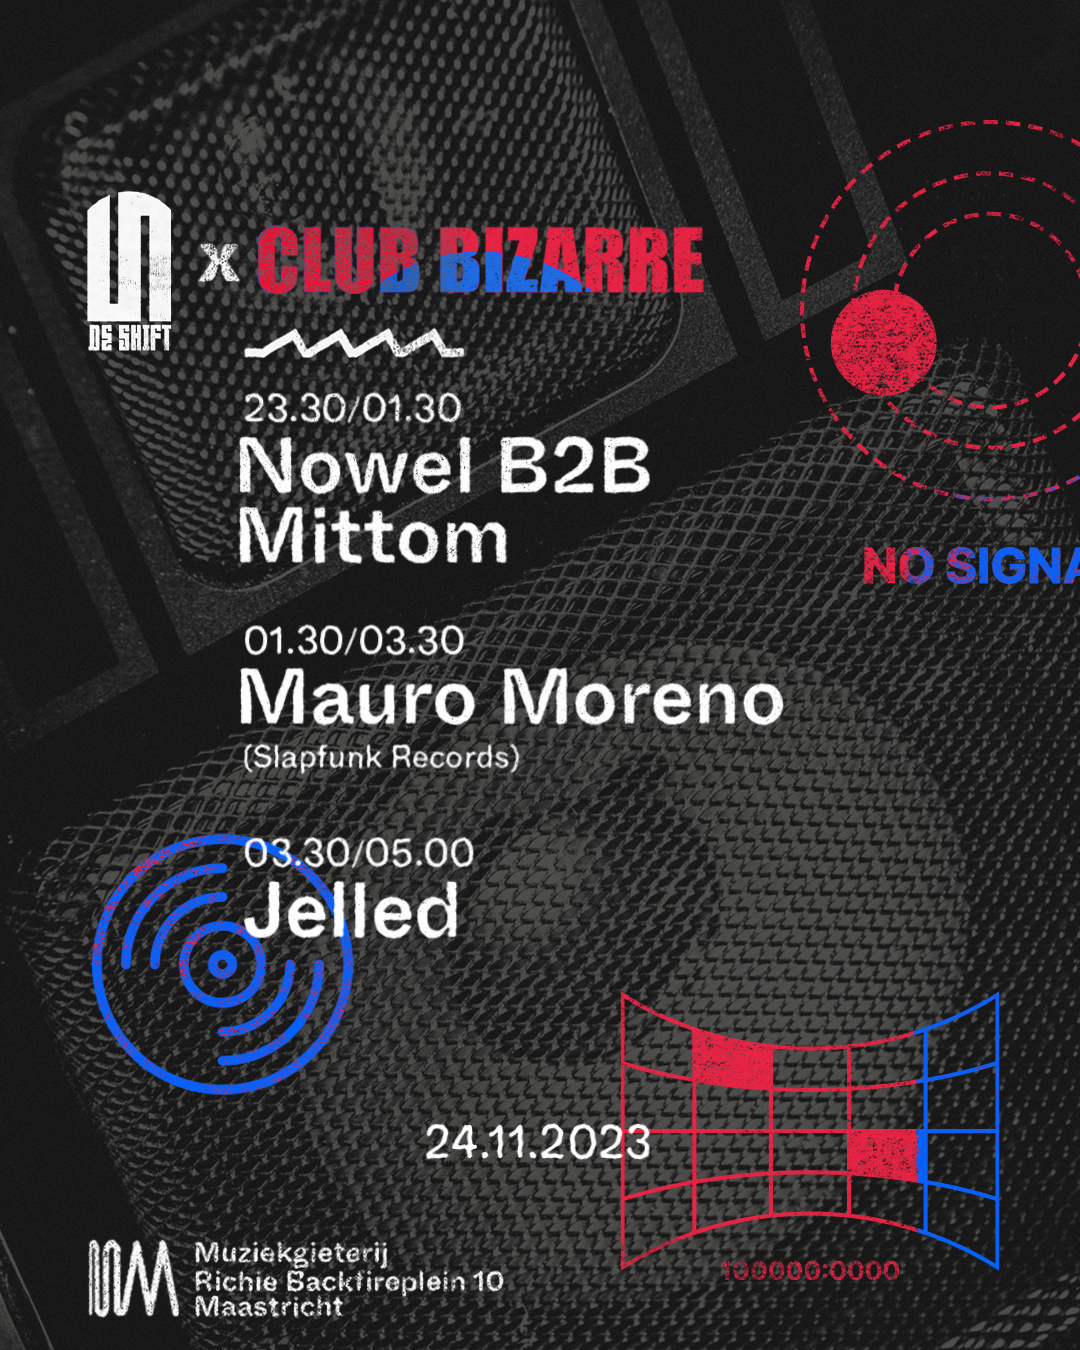 De Shift x Club Bizarre with Mauro Moreno - Página frontal